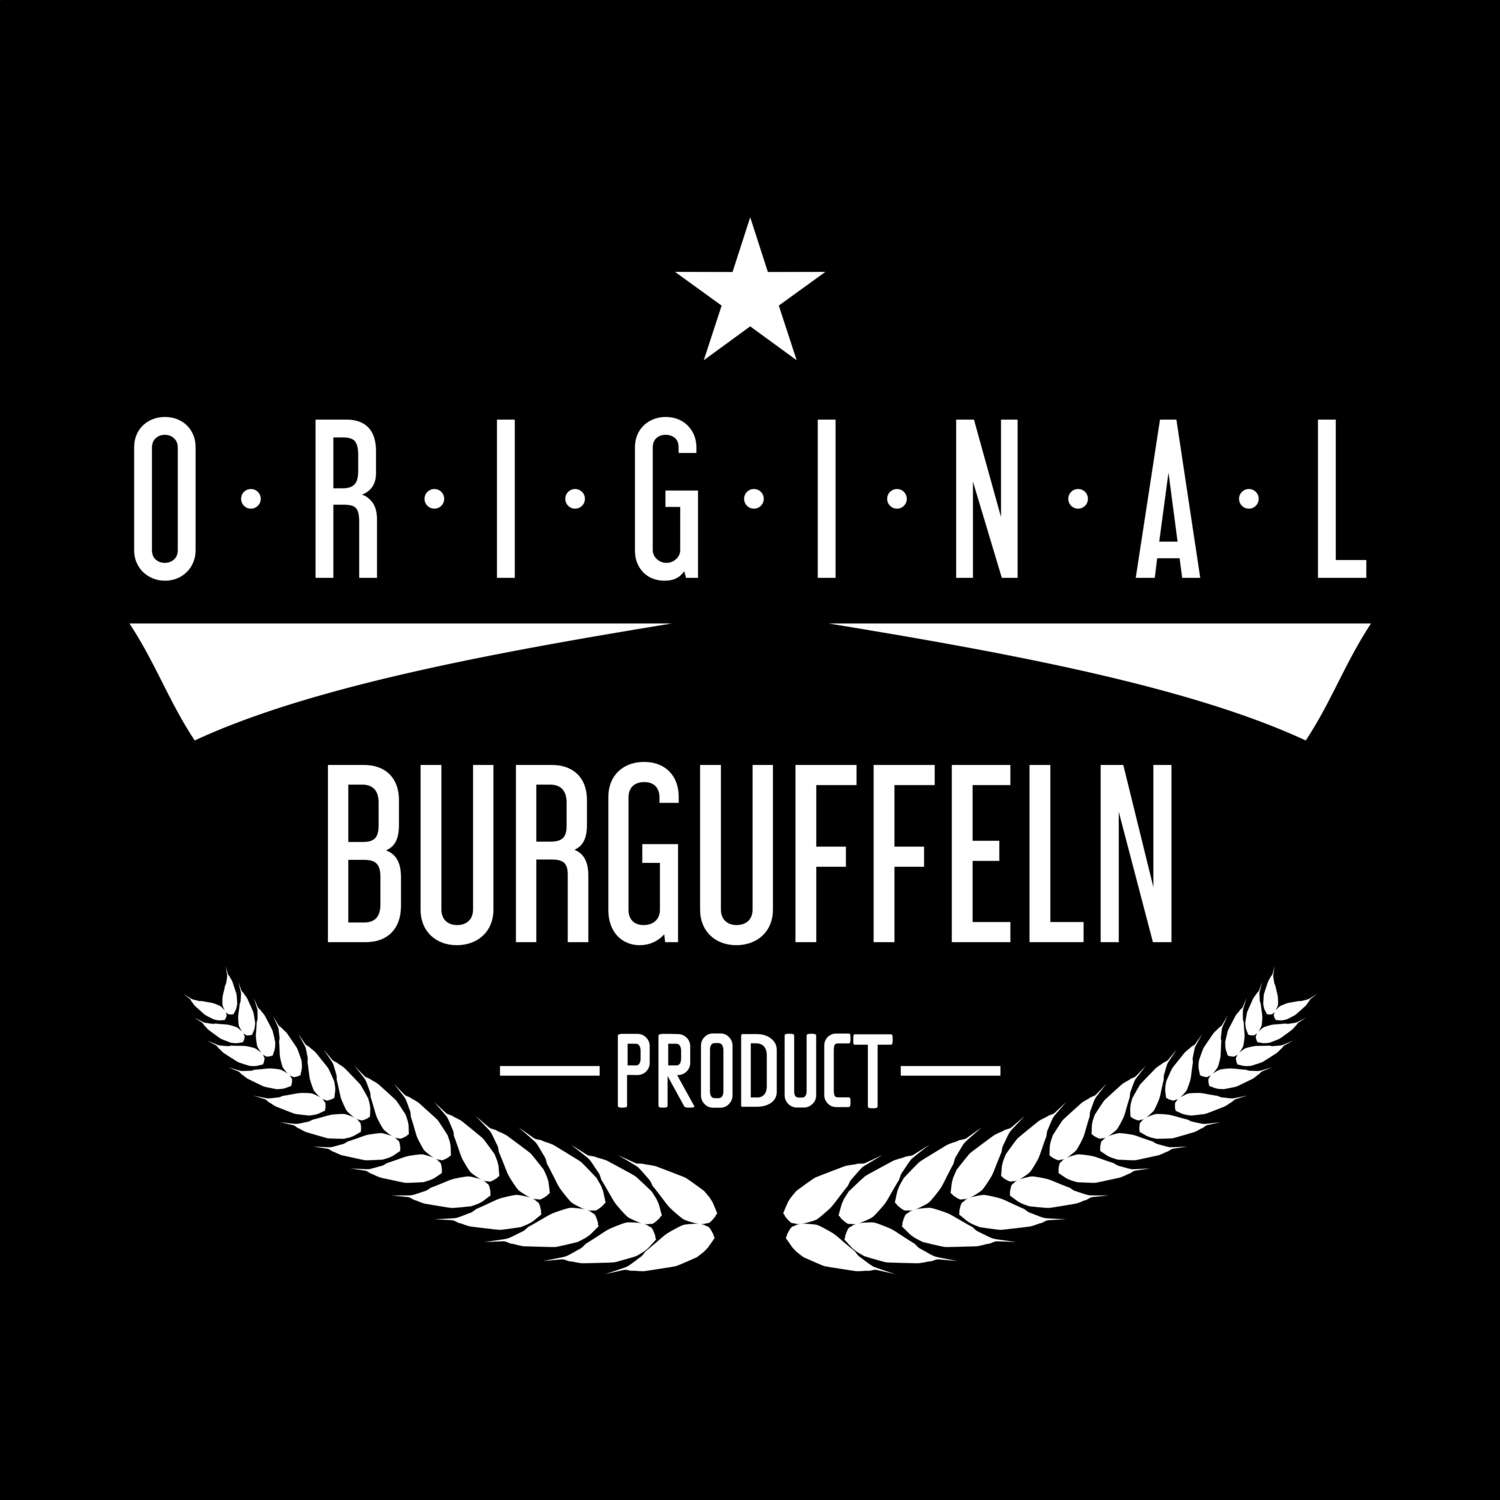 Burguffeln T-Shirt »Original Product«